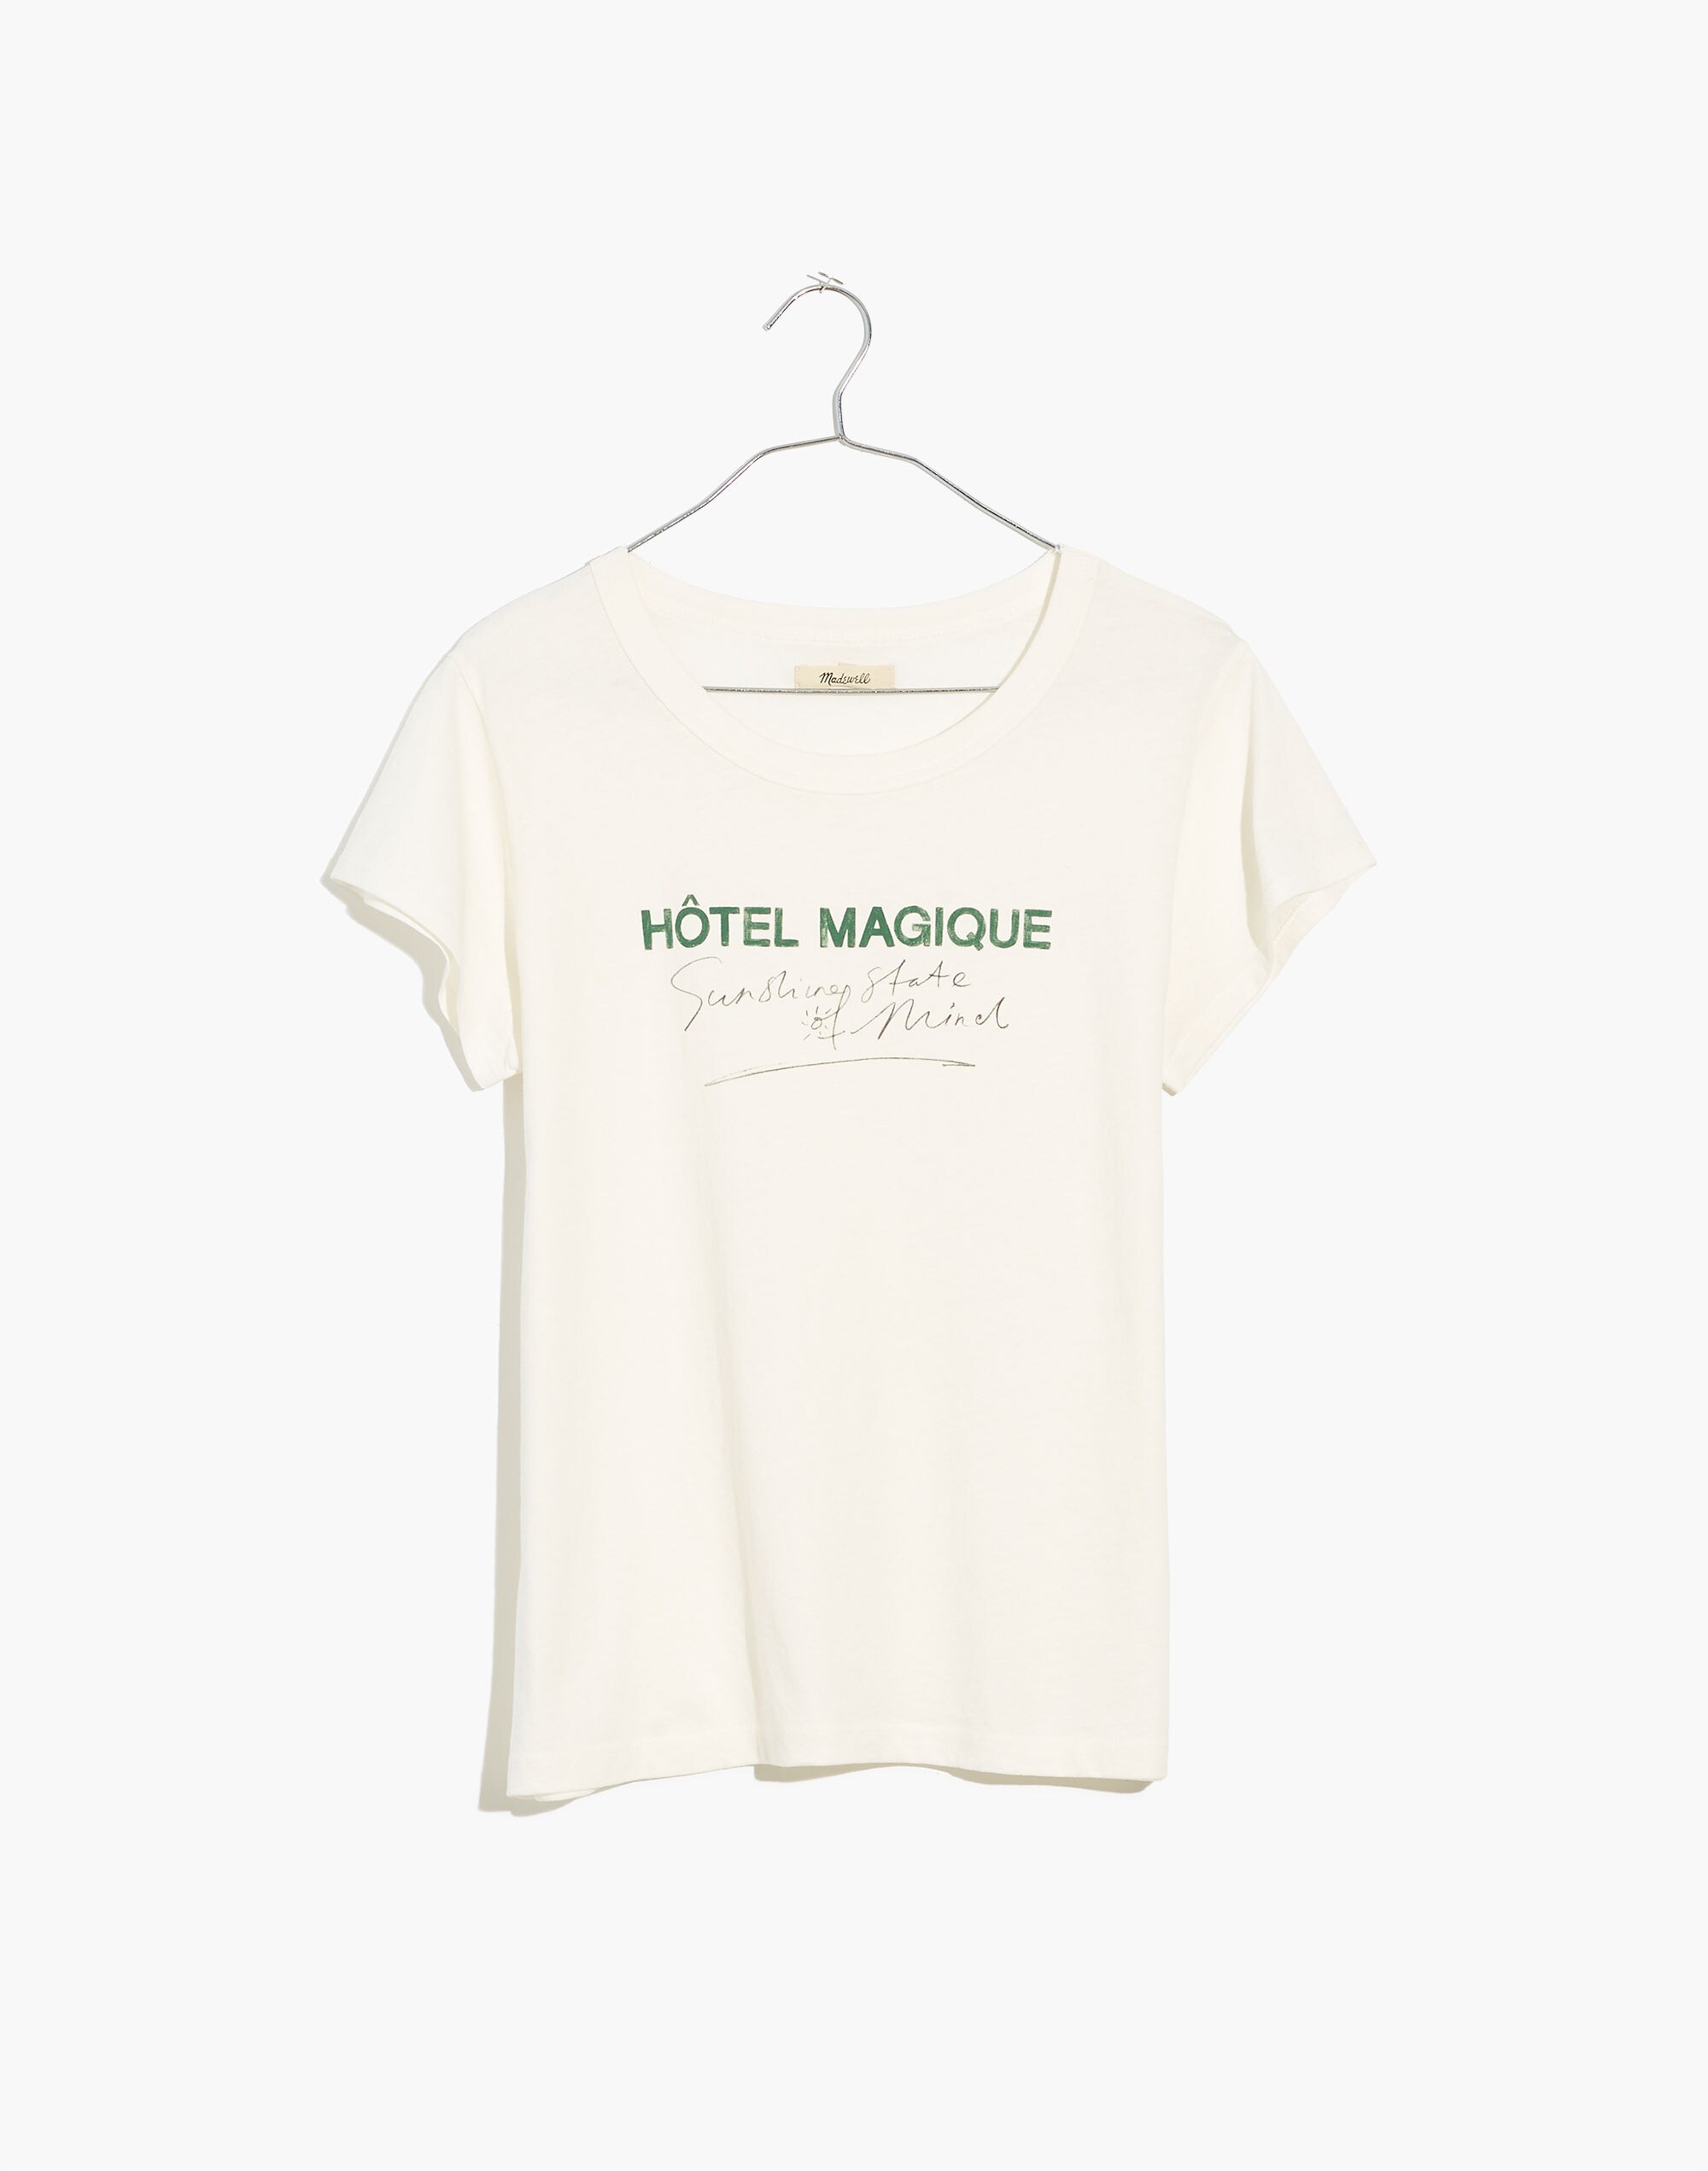 Madewell x Hôtel Magique Sunshine State of Mind Perfect Vintage Tee